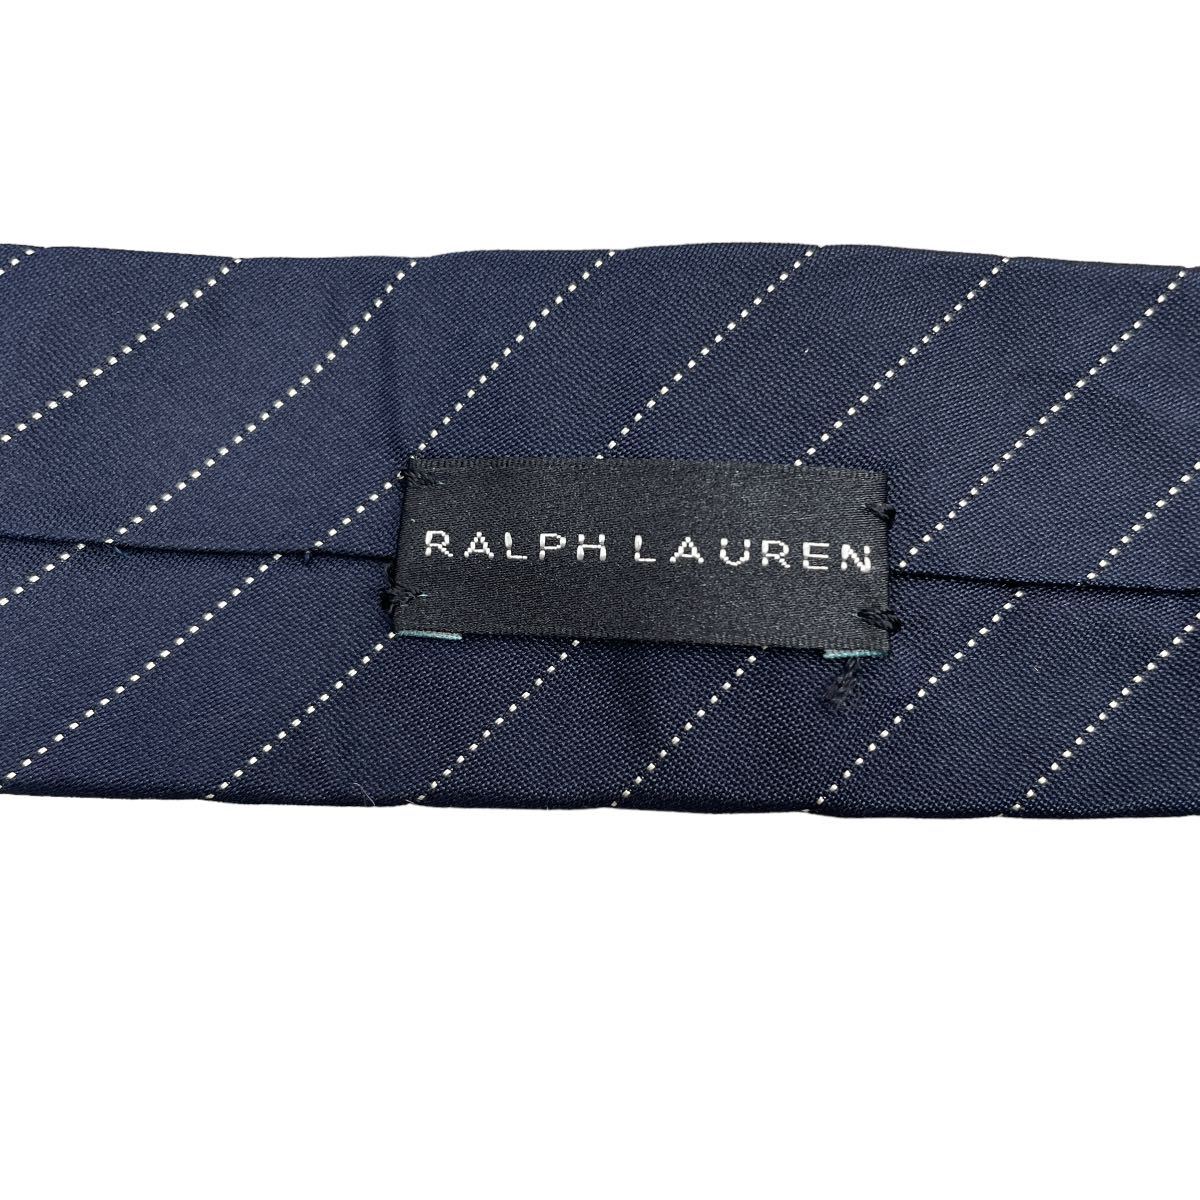 Ralph Lauren Black Label / Ralph Lauren Black Label stripe necktie navy Italy made silk 